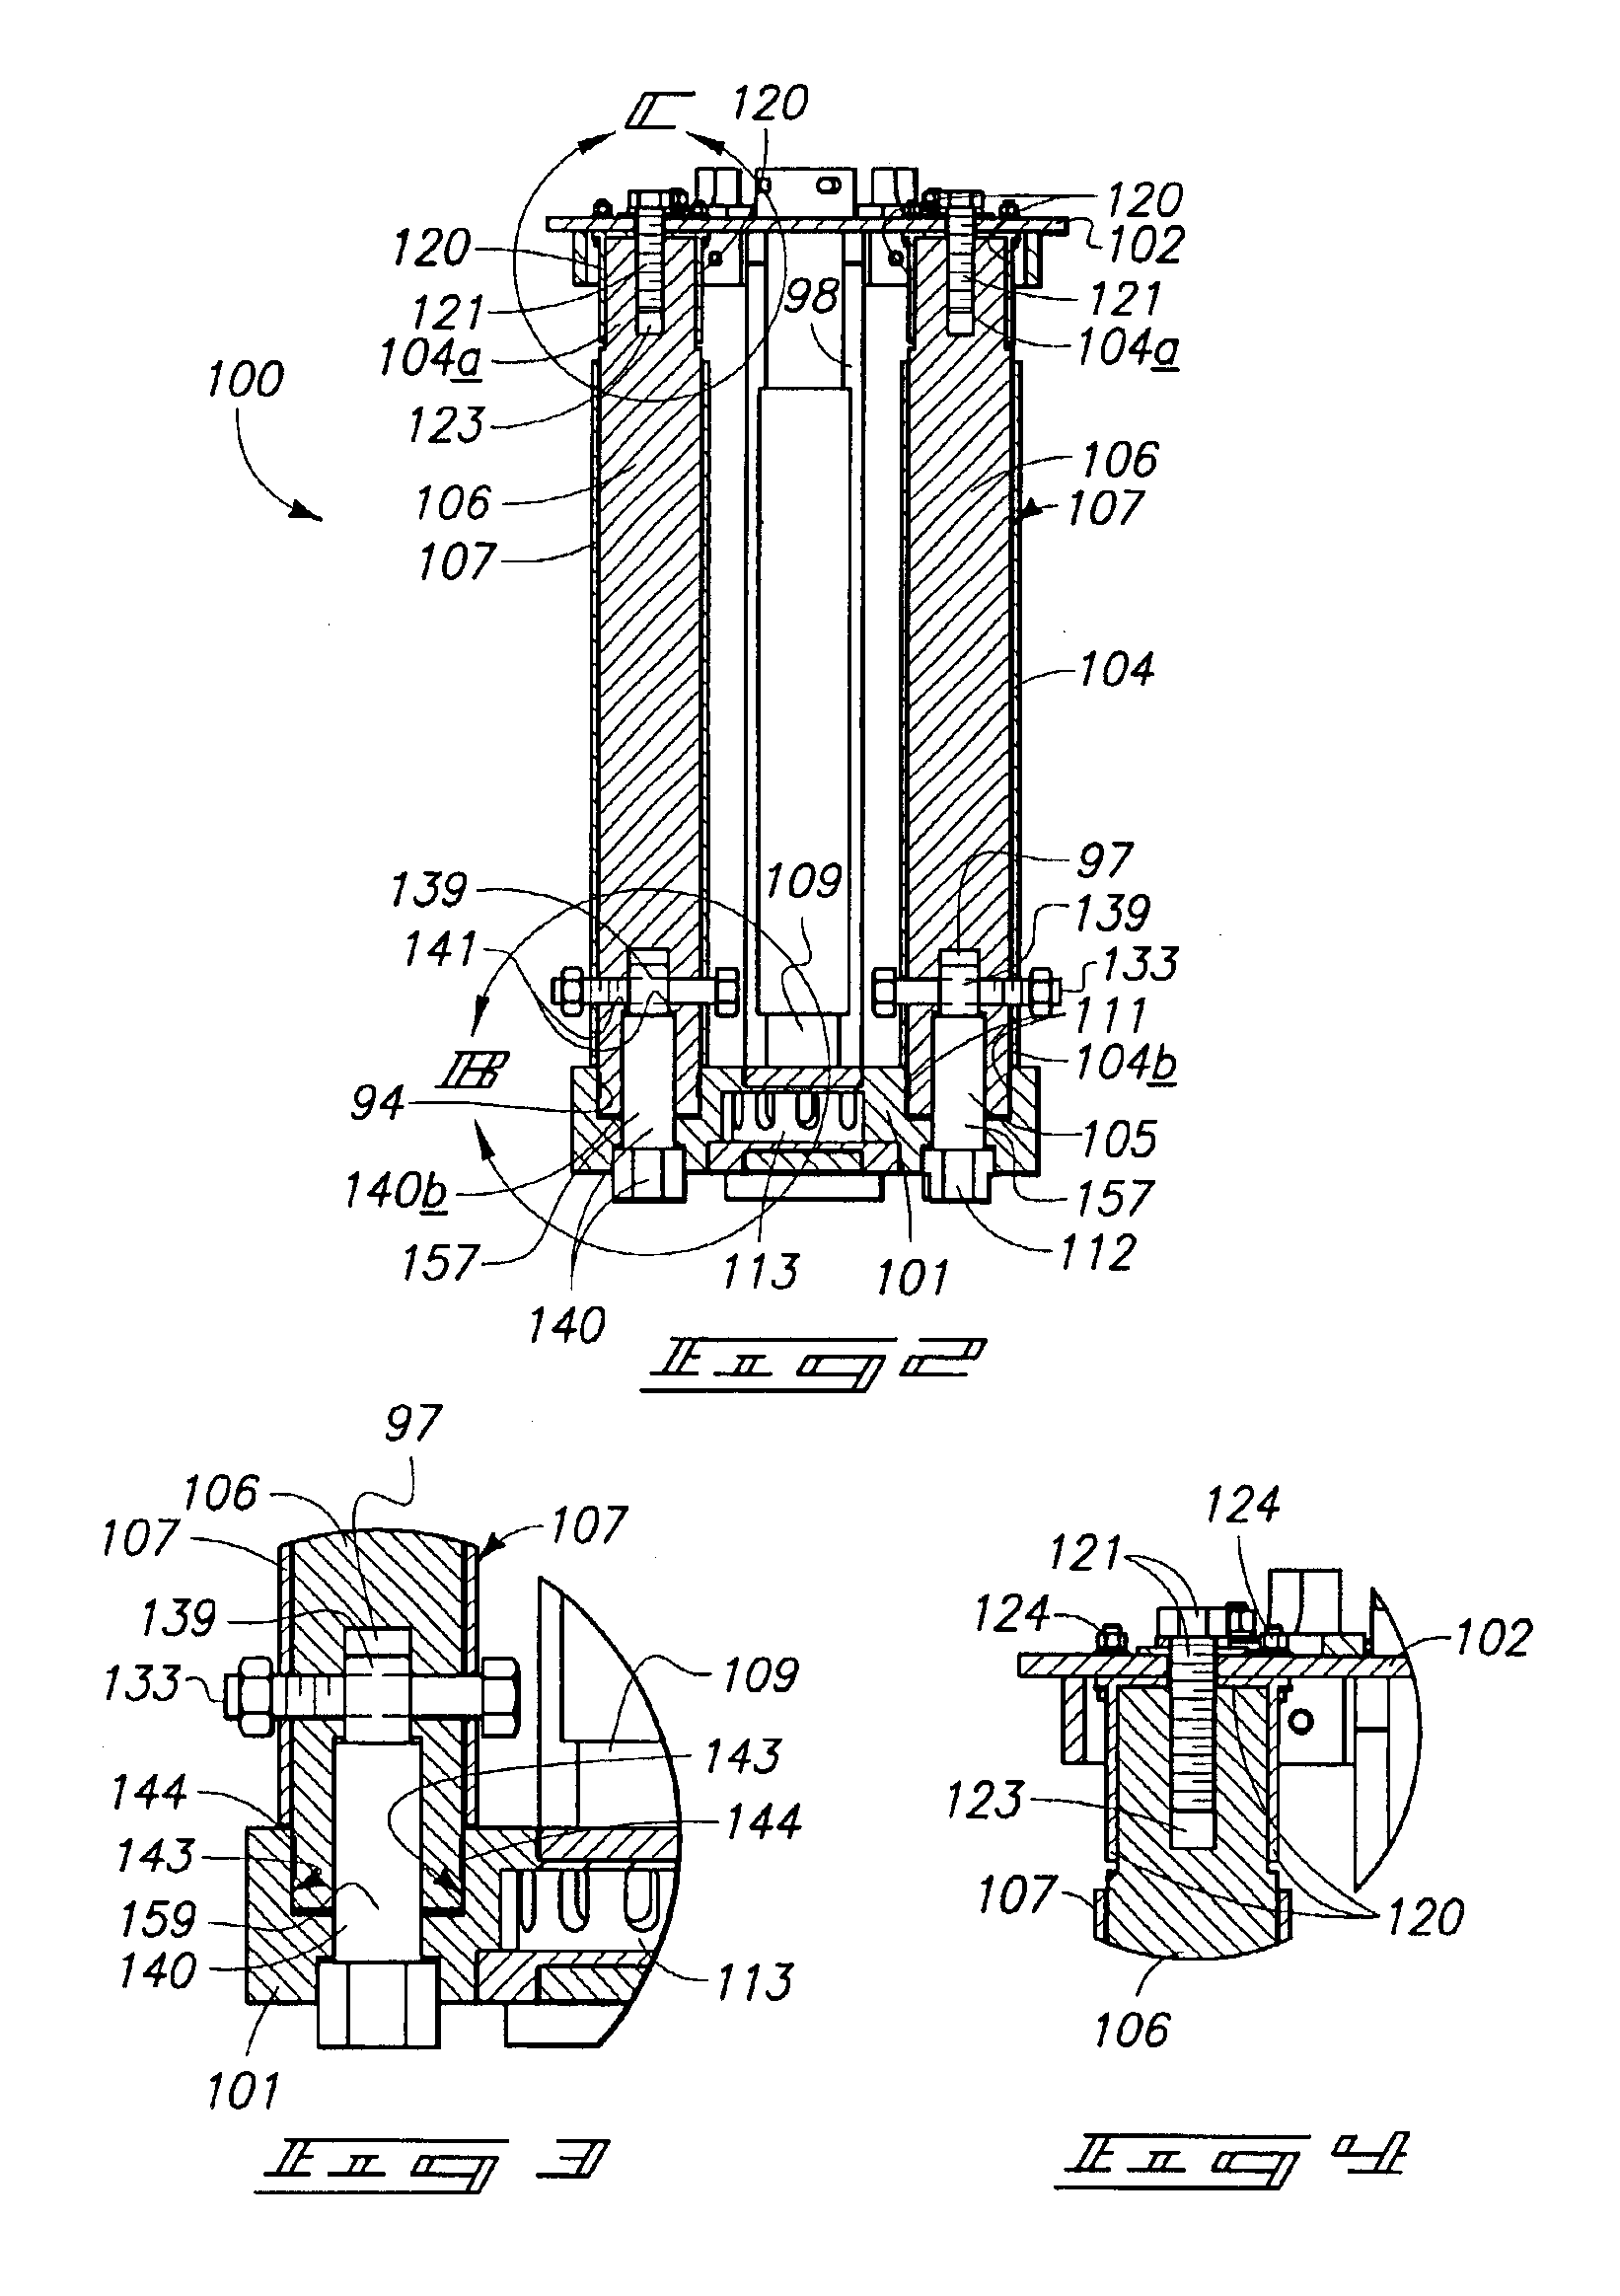 Molten metal pump system